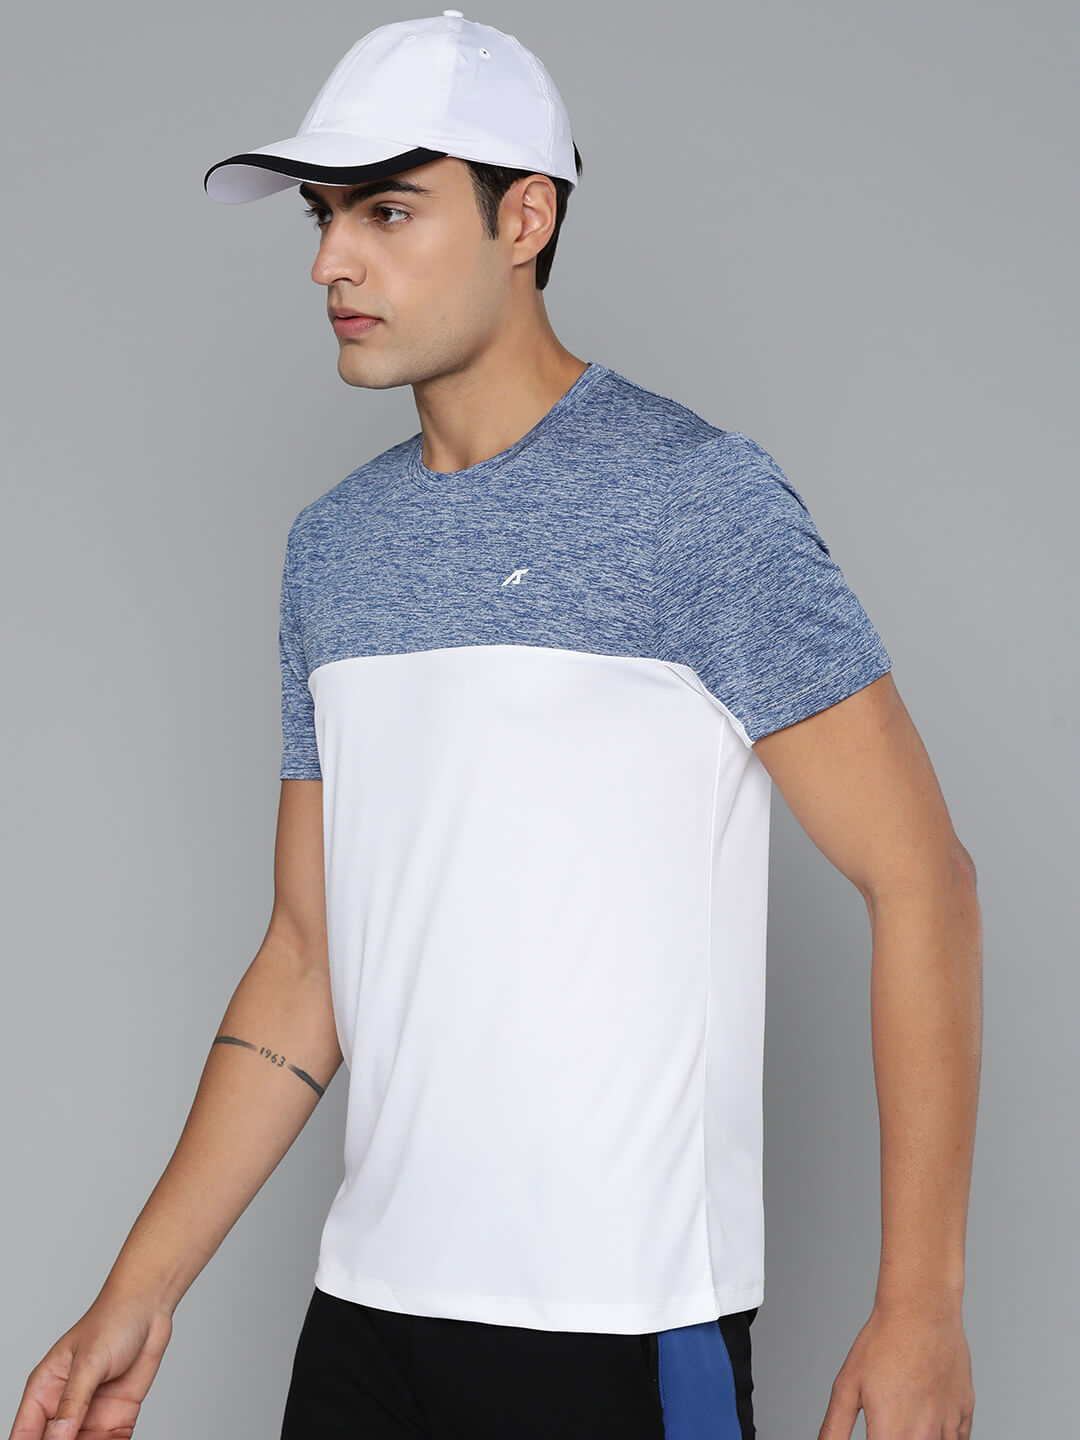 Alcis Men White Blue Colourblocked Dry Tech Slim Fit Sports T-shirt